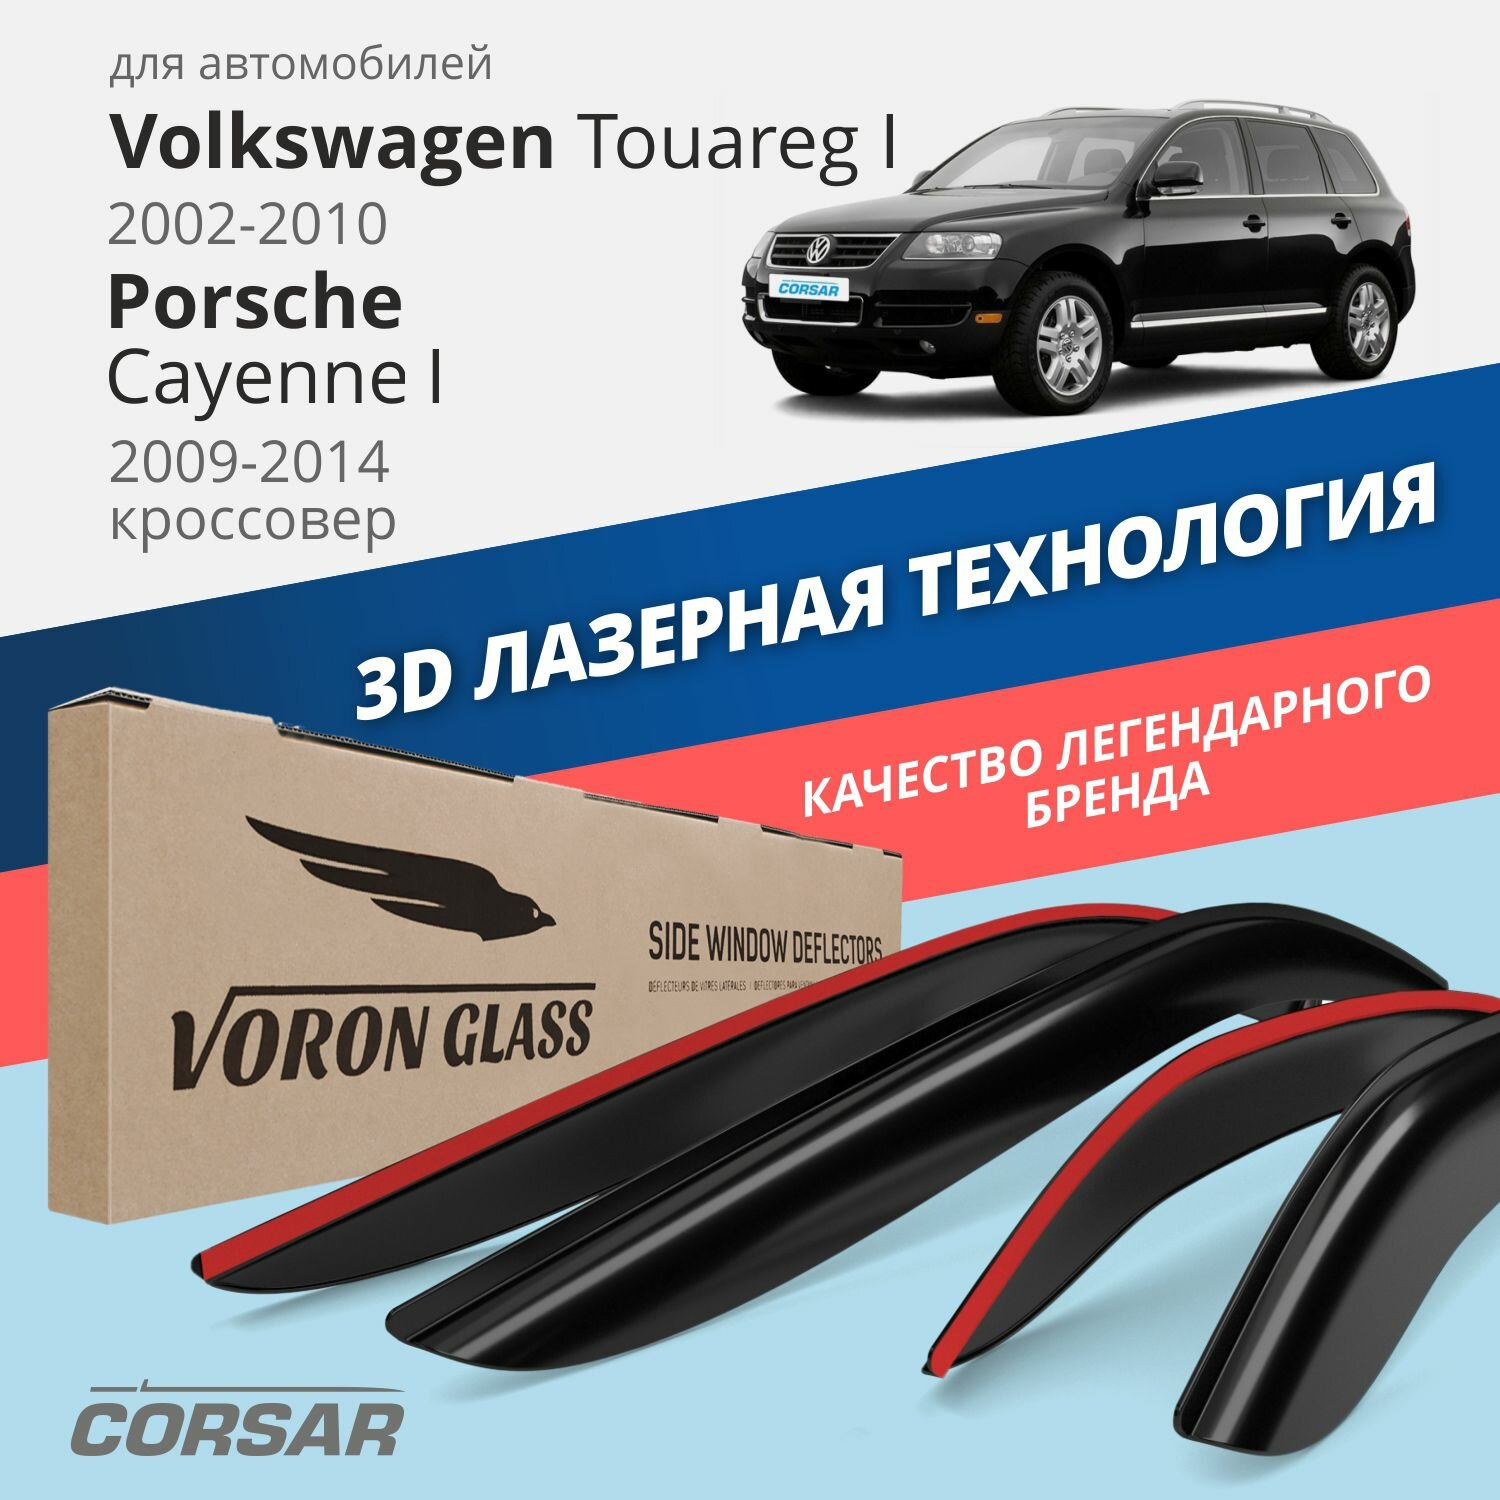 Дефлекторы окон Voron Glass серия Corsar для Volkswagen Touareg I 2002-2010 / Porsche Cayenne 2002-2007 накладные 4 шт.